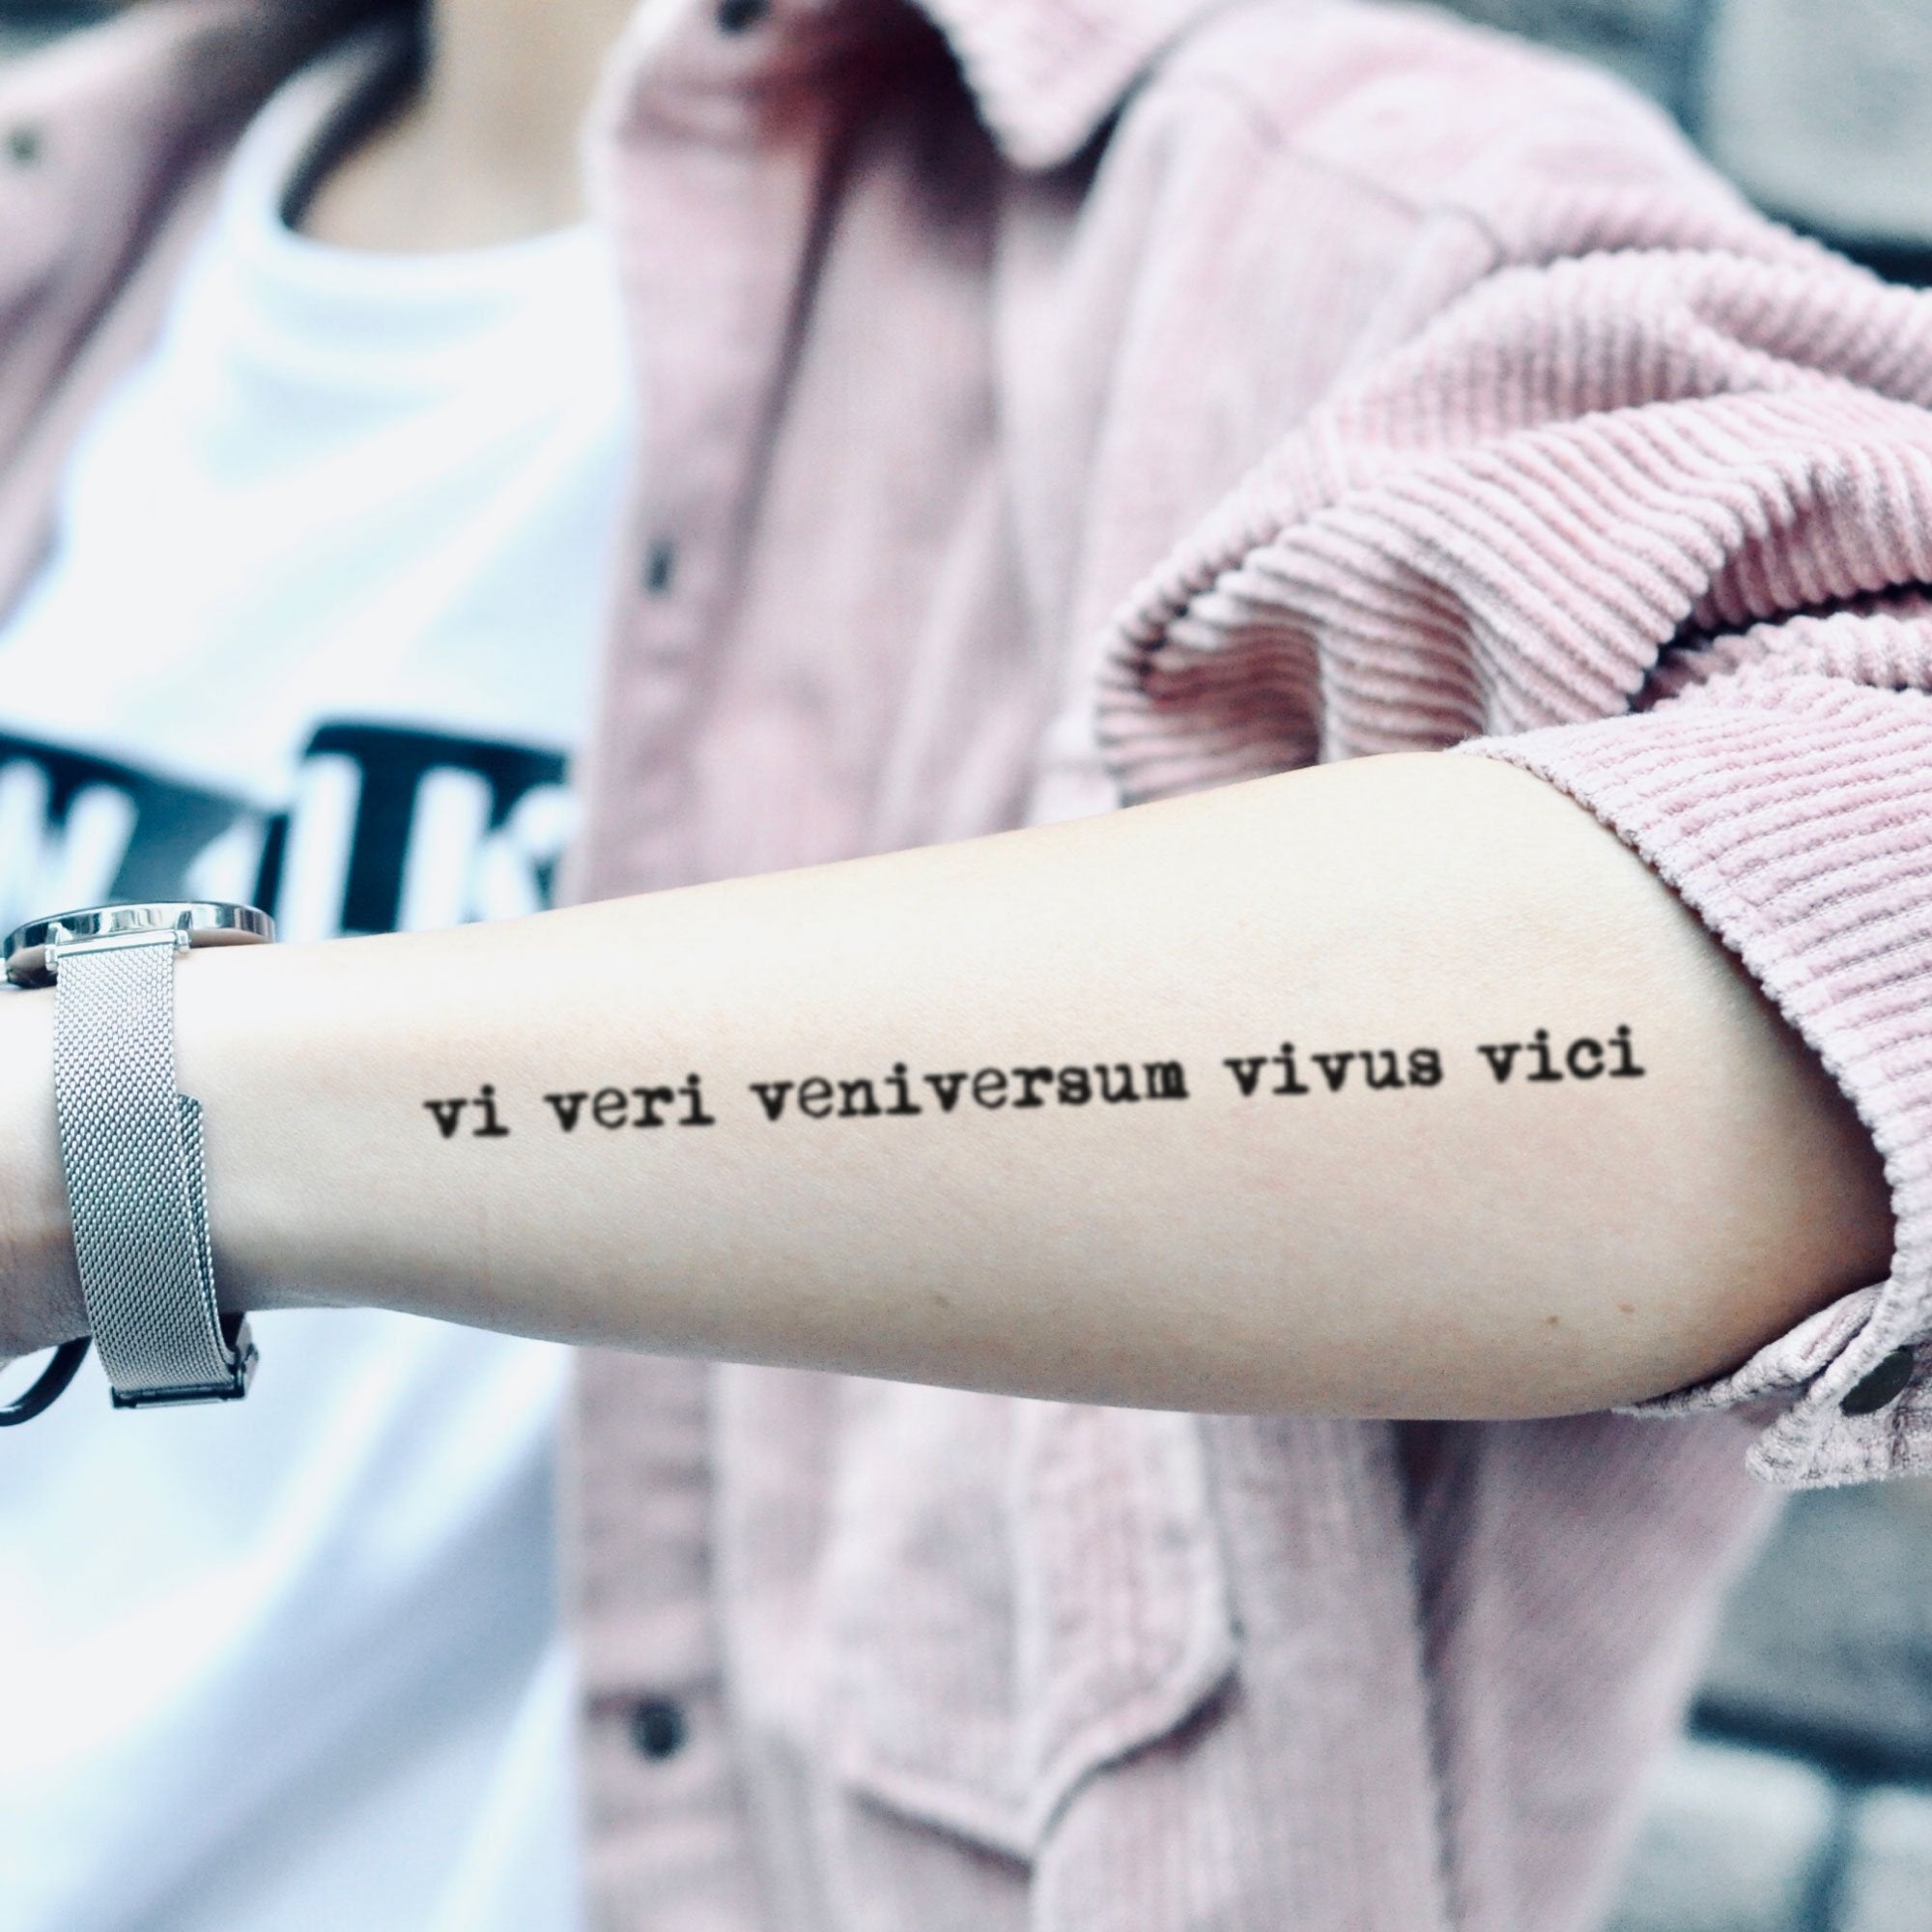 Veni Vidi Vici Temporary Tattoo Sticker (Set of 2)